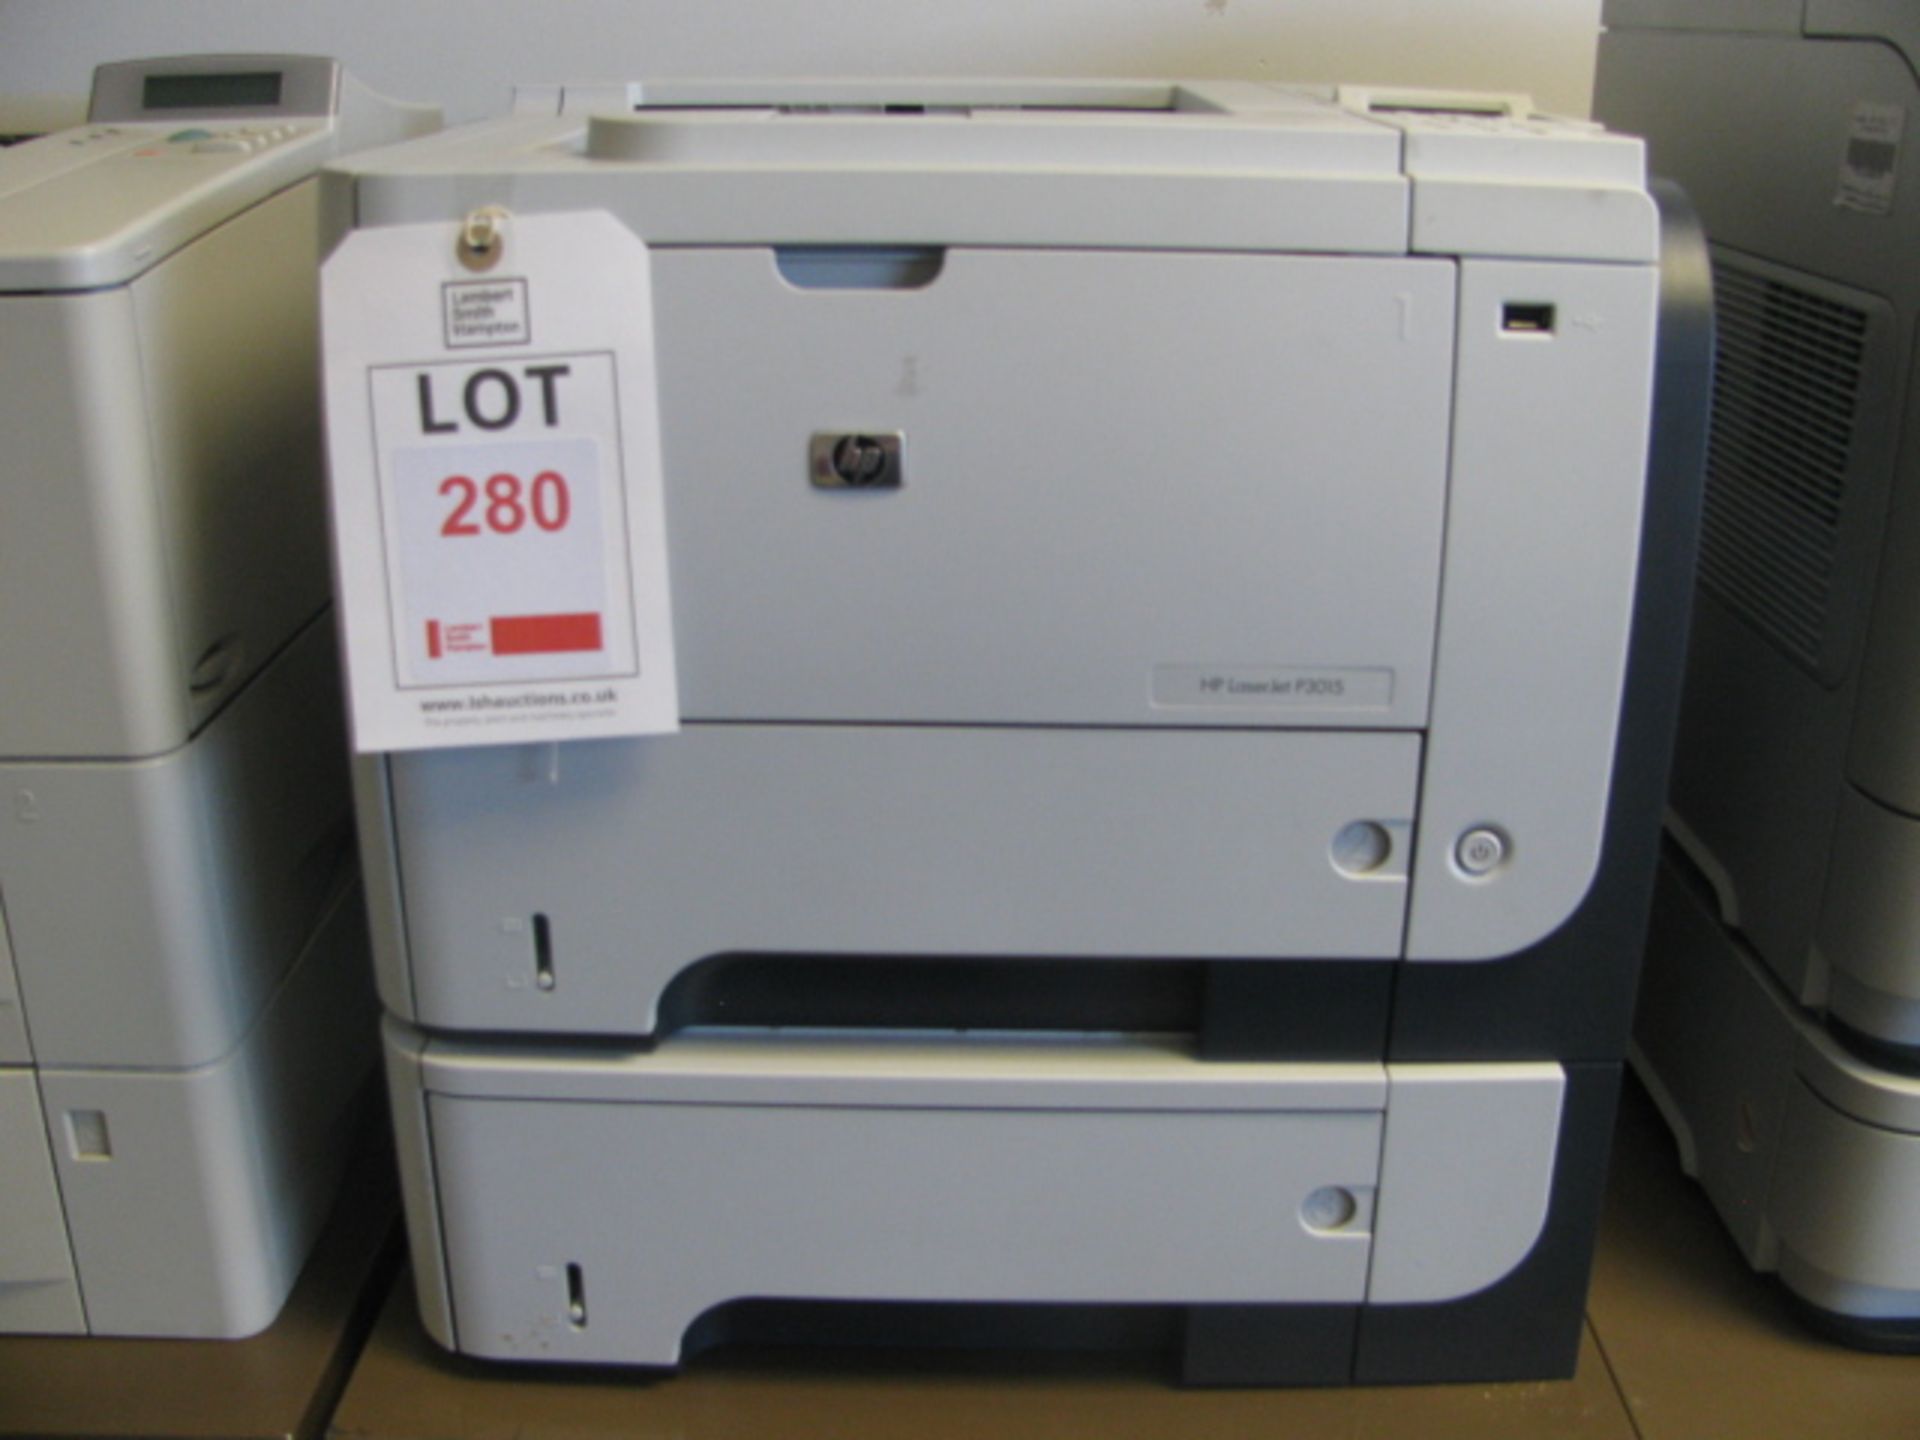 Hewlett Packard Laserjet P3015 printer